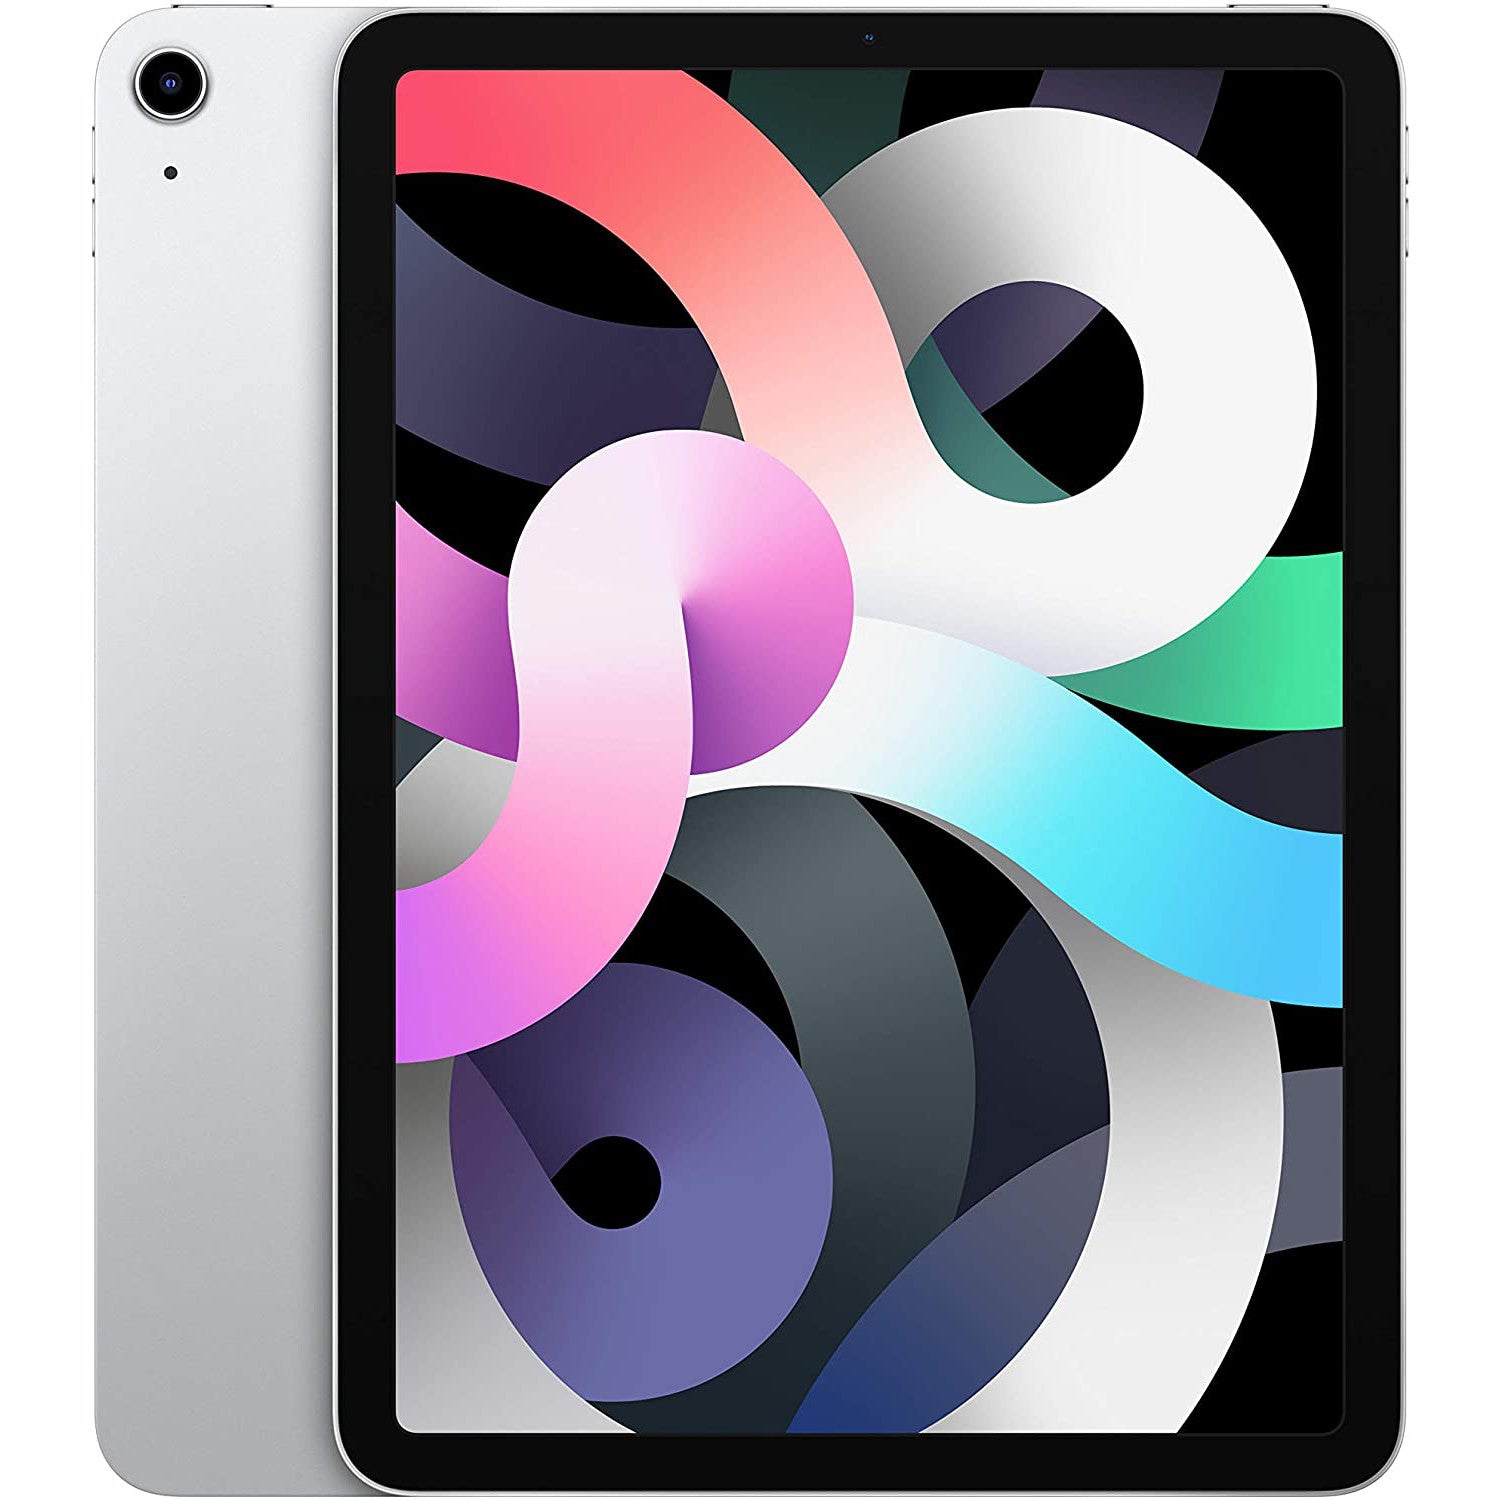 iPad Air 4 64GB WiFi & Cellular - Silber - Makellos